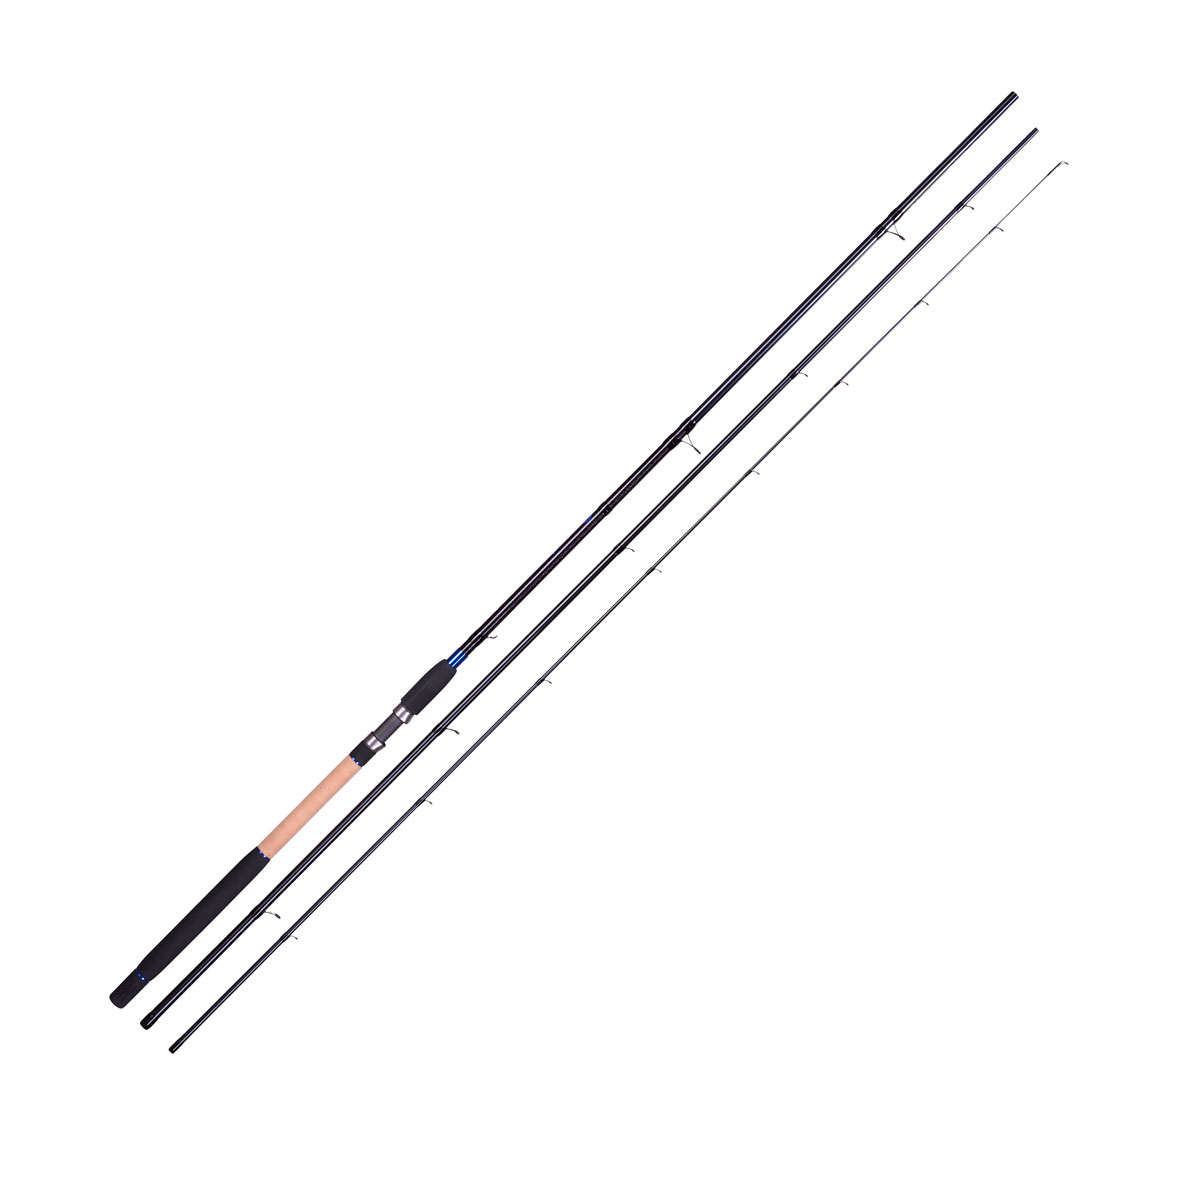 Cadence CR10 13ft Match Fishing Rods - Cadence Fishing